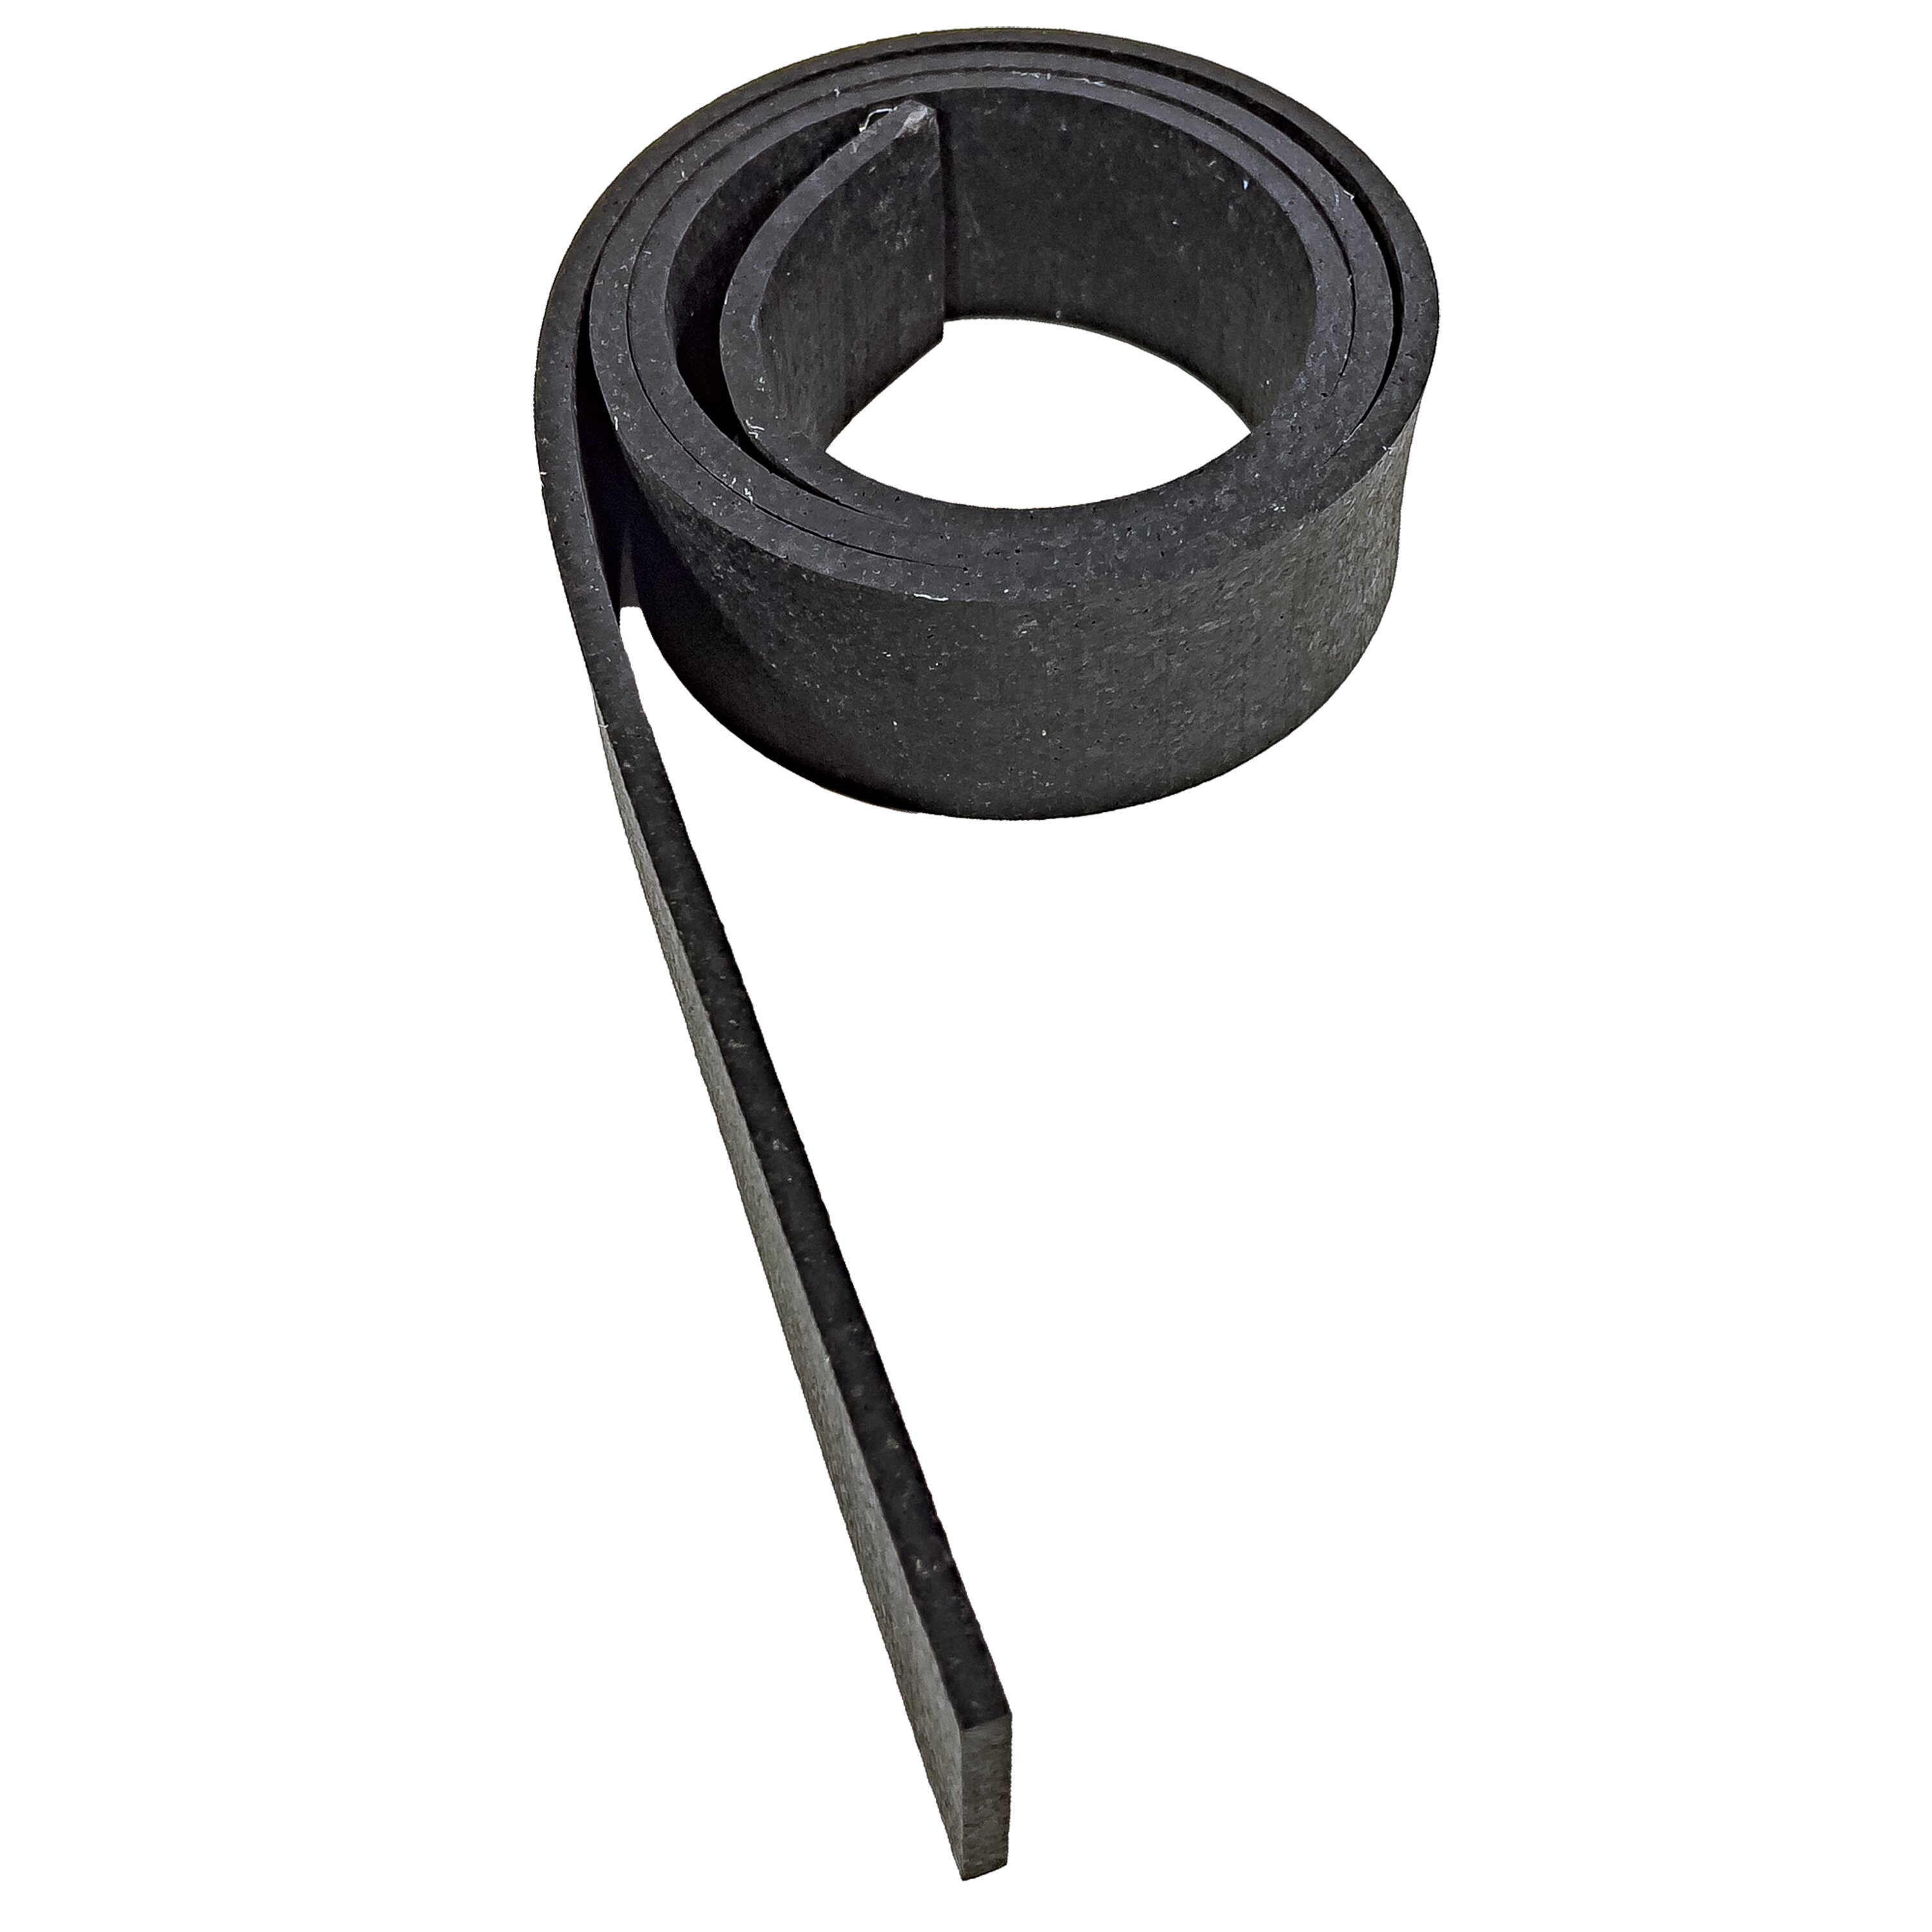 Černá gumová soklová podlahová lišta FLOMA FitFlo IceFlo - délka 200 cm, šířka 7 cm, tloušťka 0,8 cm